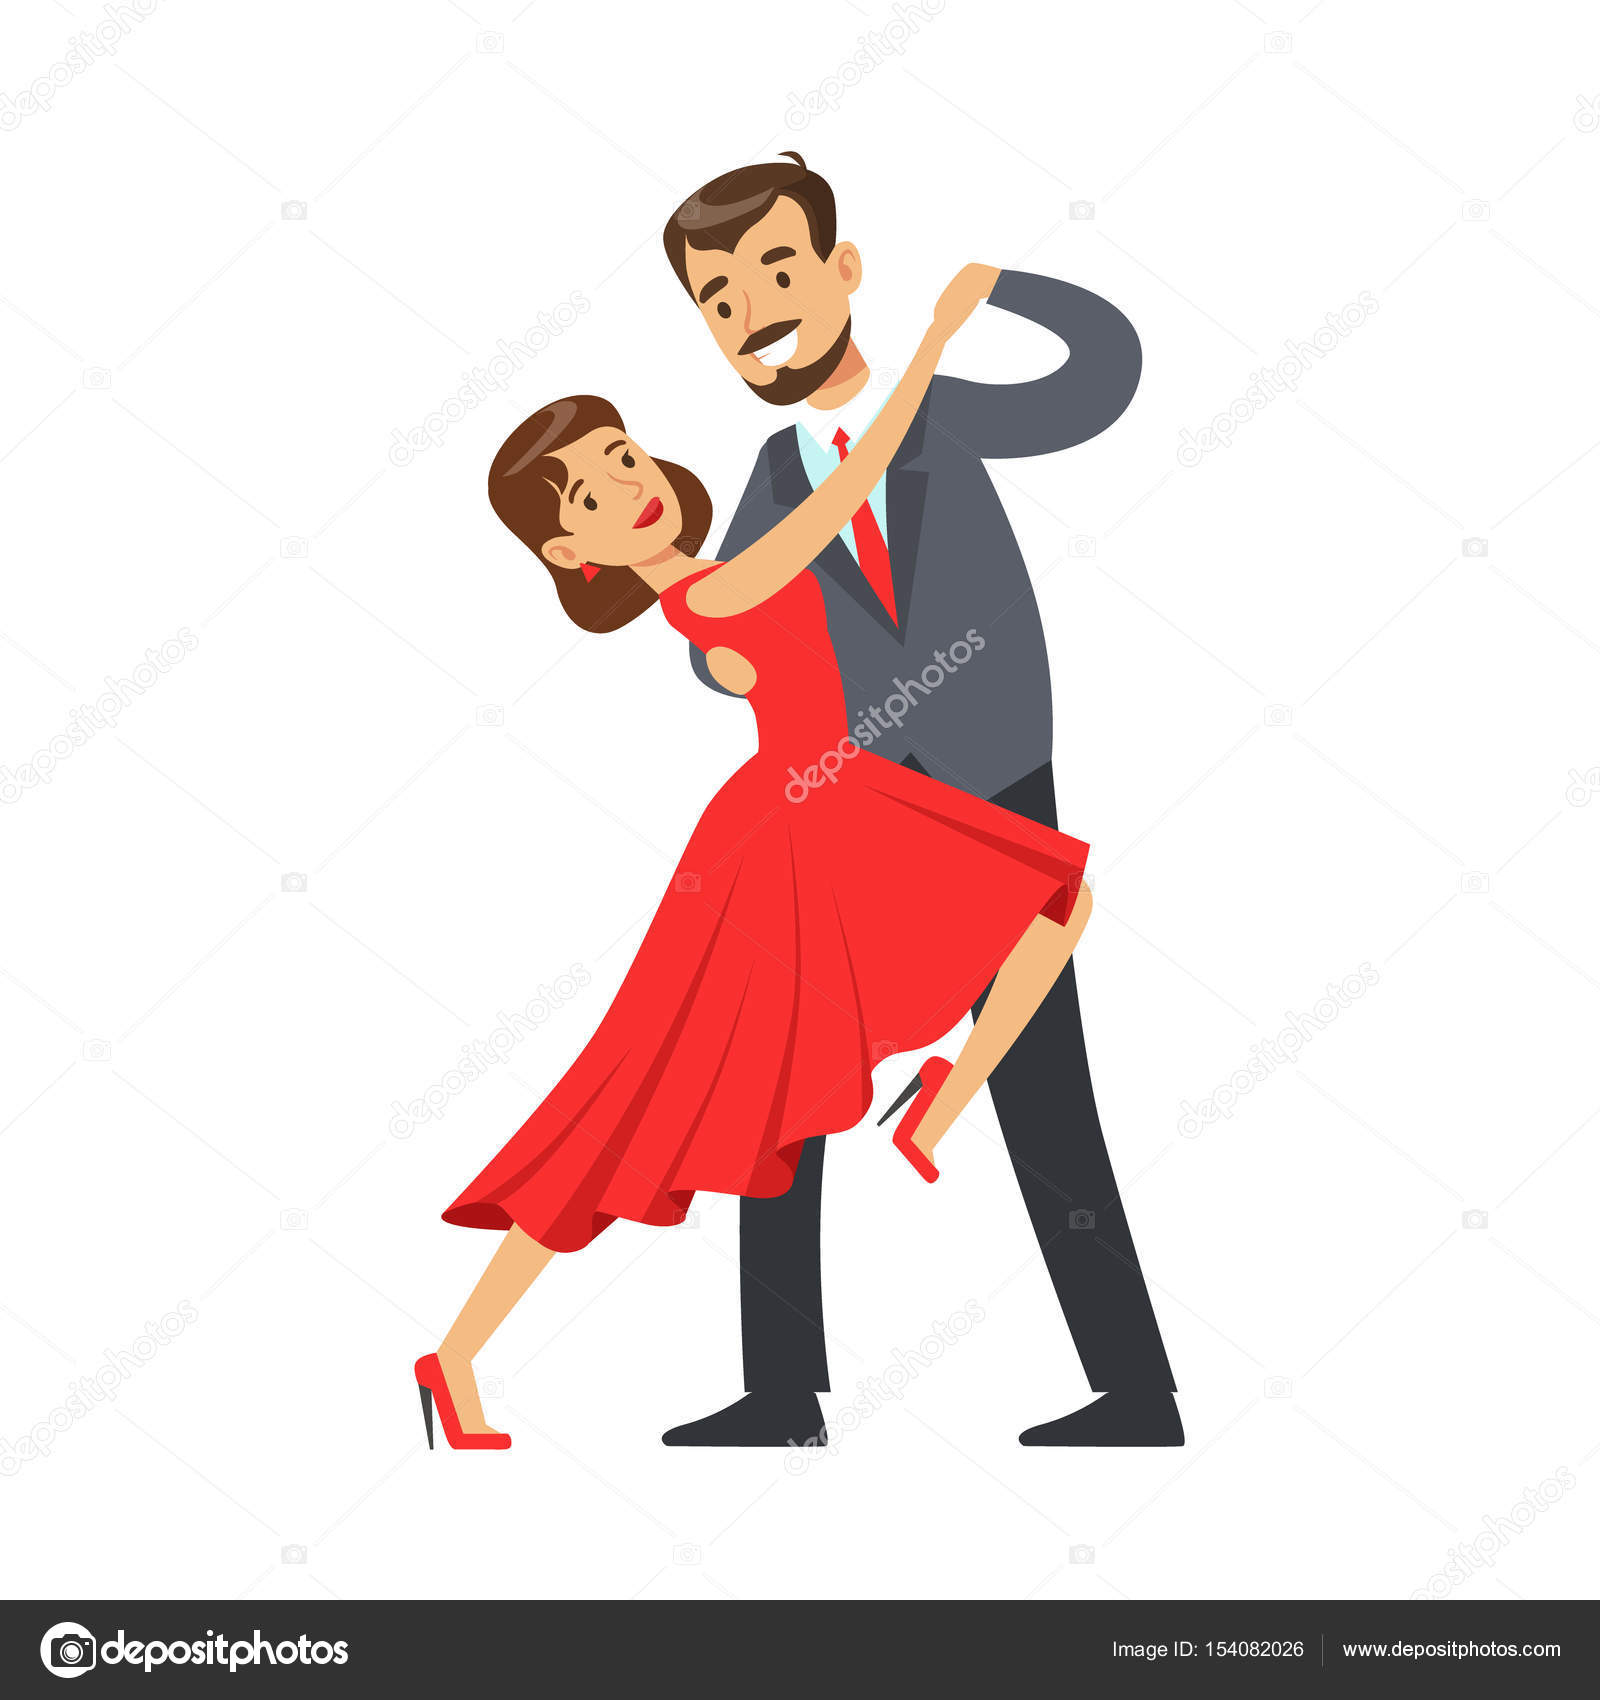 Dan arino profissional casal dan ando tango colorido 